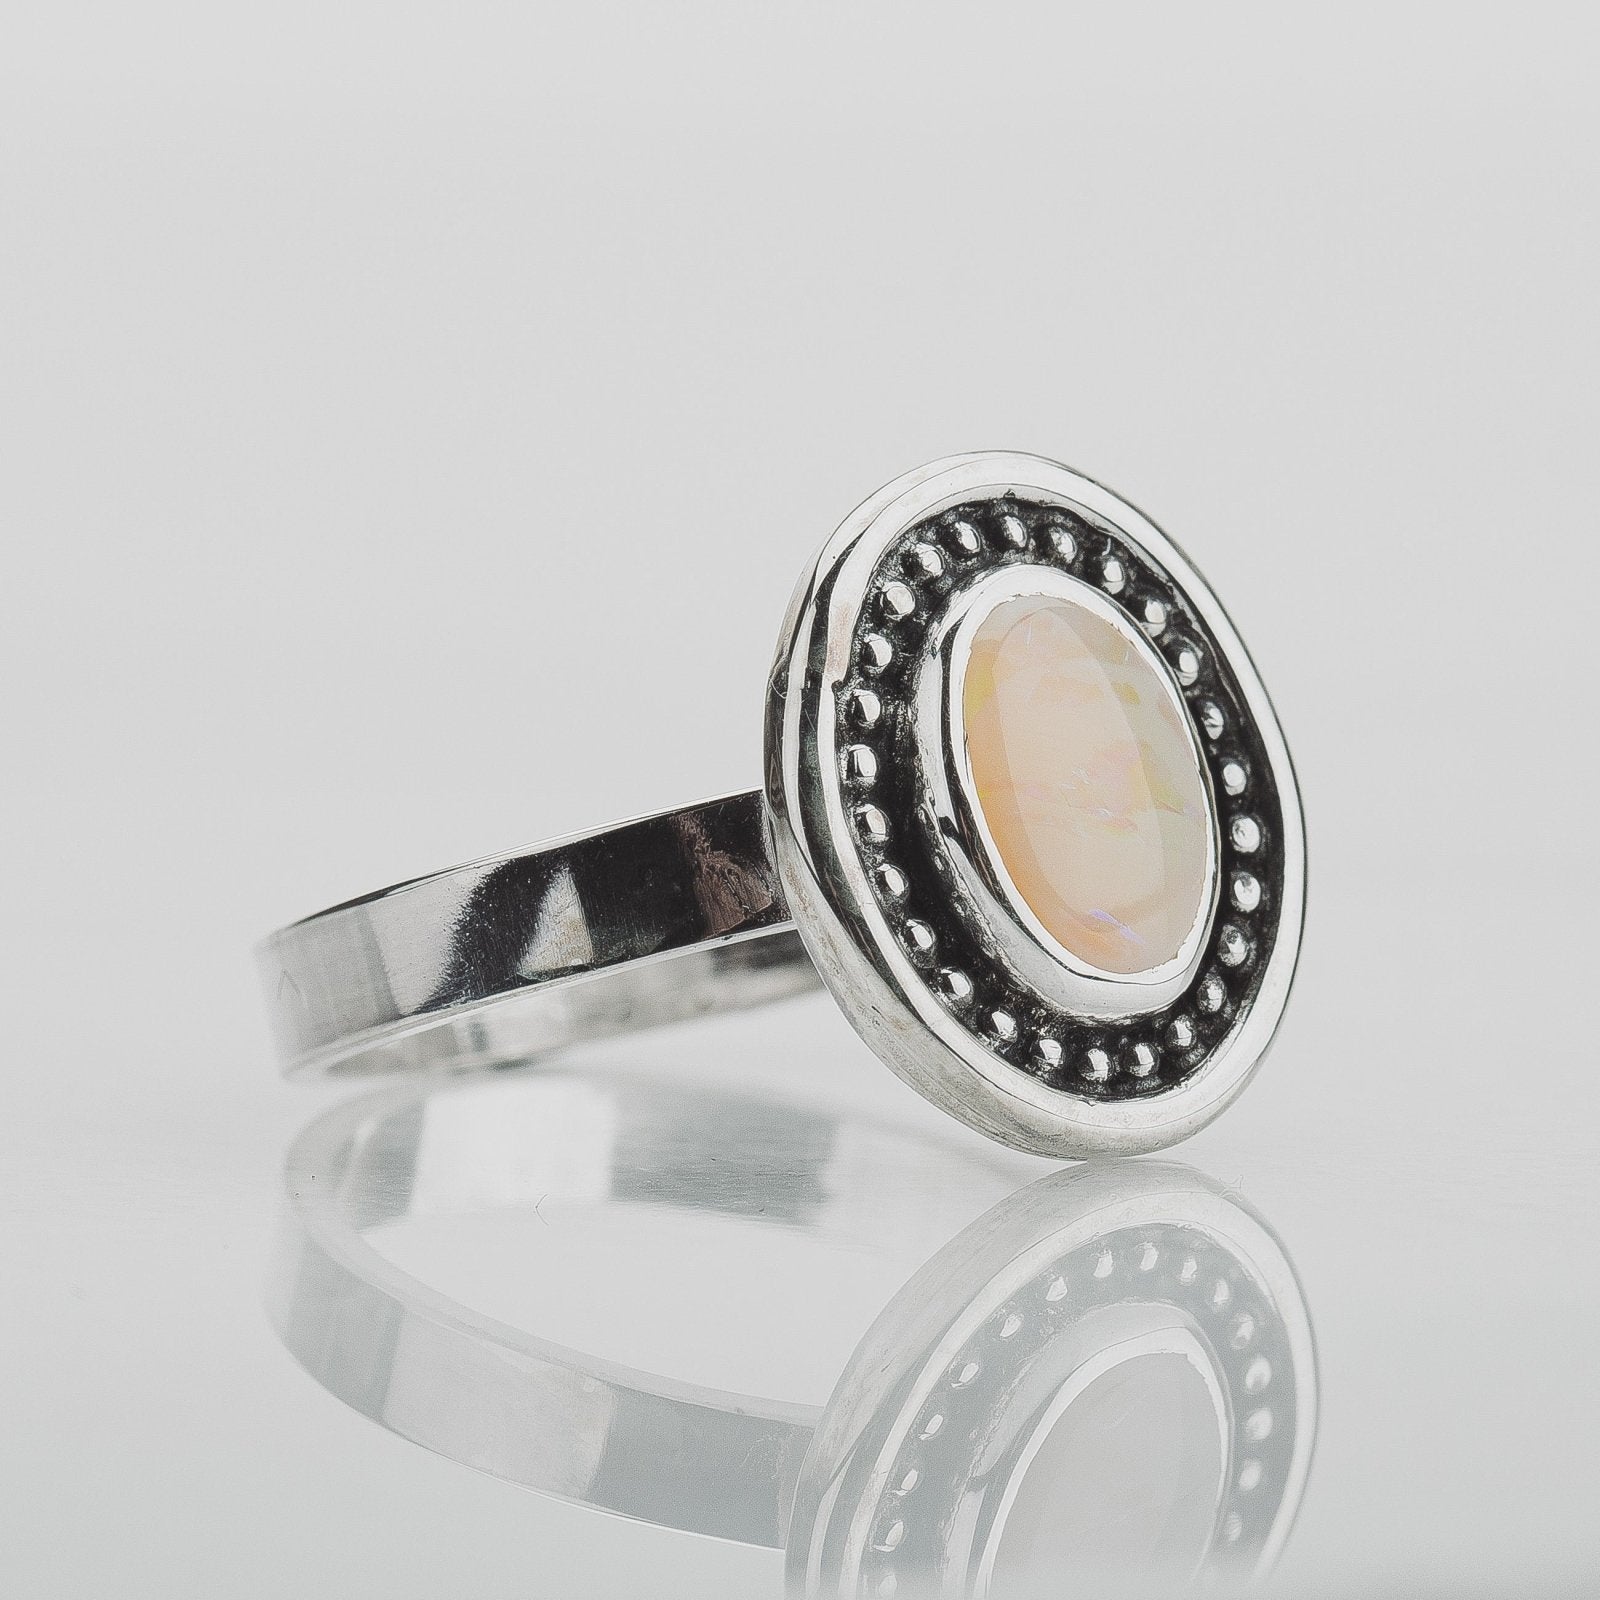 Size 7 Opal Ring - Melanie Golden Jewelry - gemstone rings, rings